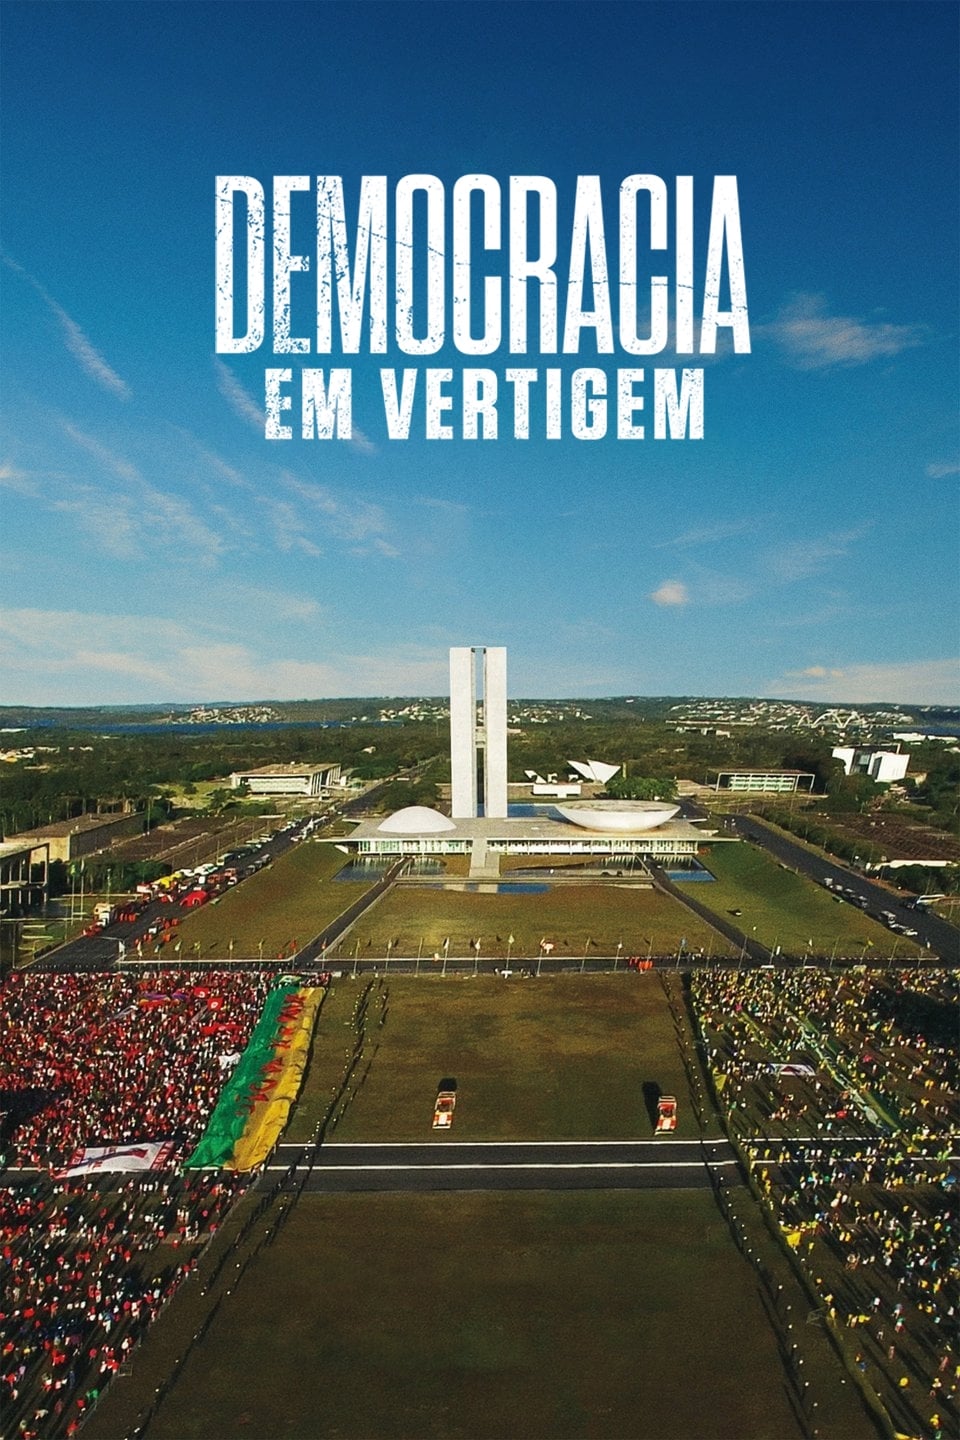 Bên bờ dân chủ (The Edge of Democracy) [2019]